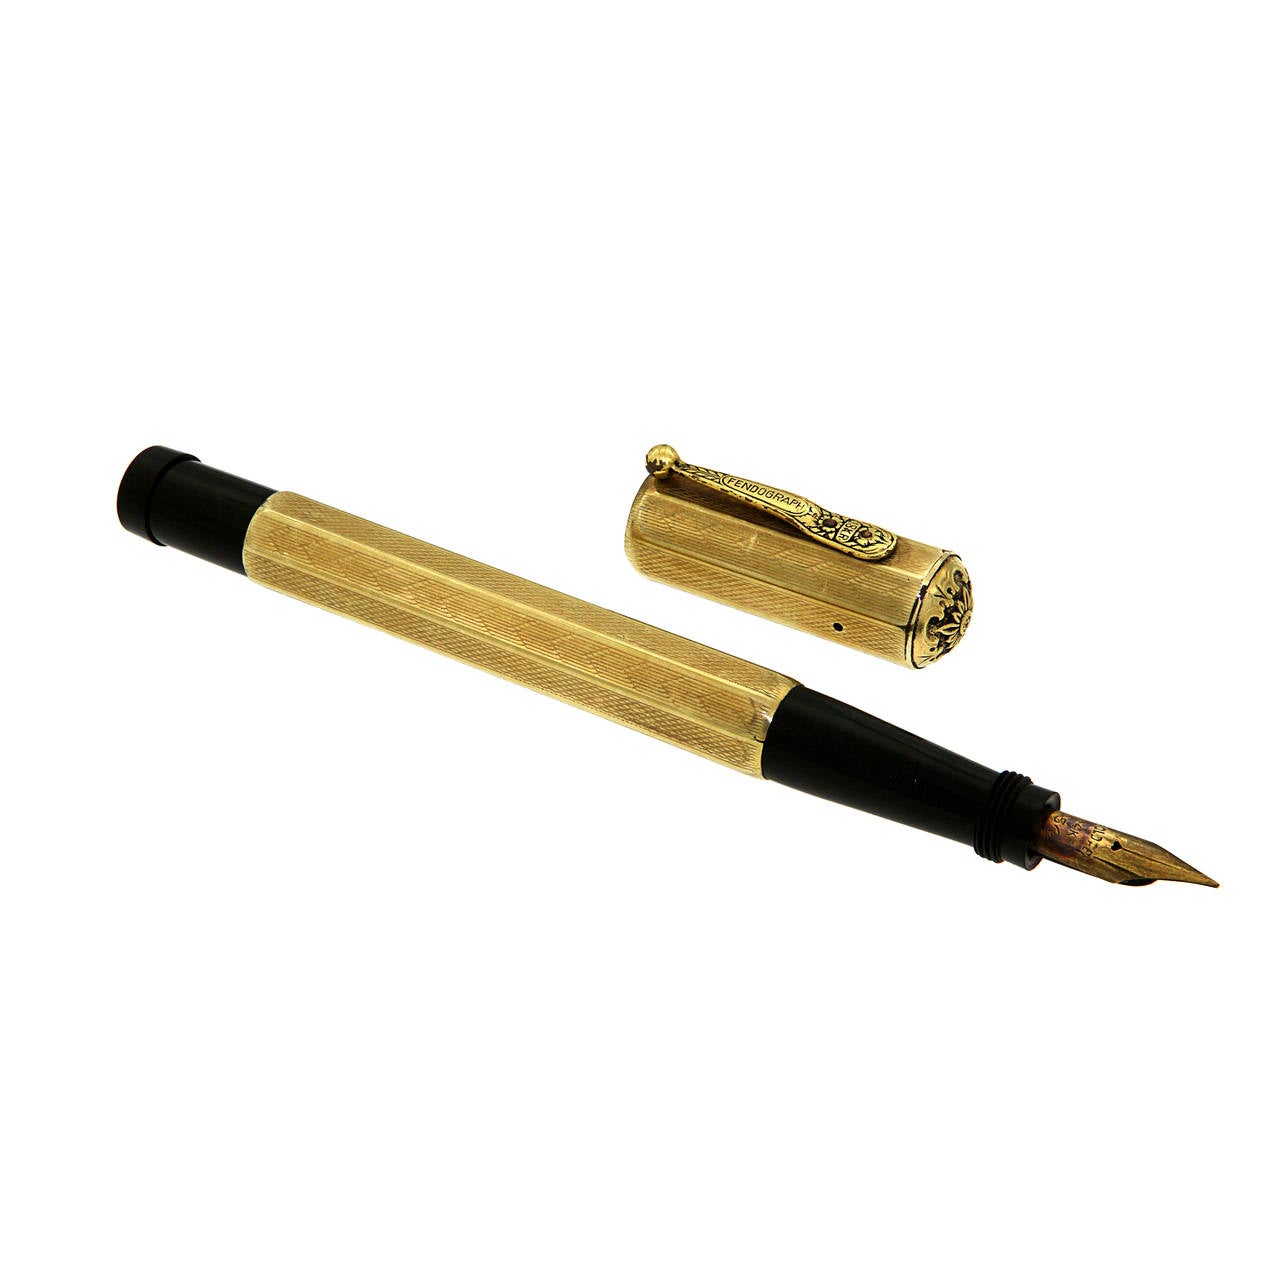 Fendogrph Fountain Pen rolled gold marked 18 KR
length 12 cm
diameter 11 mm